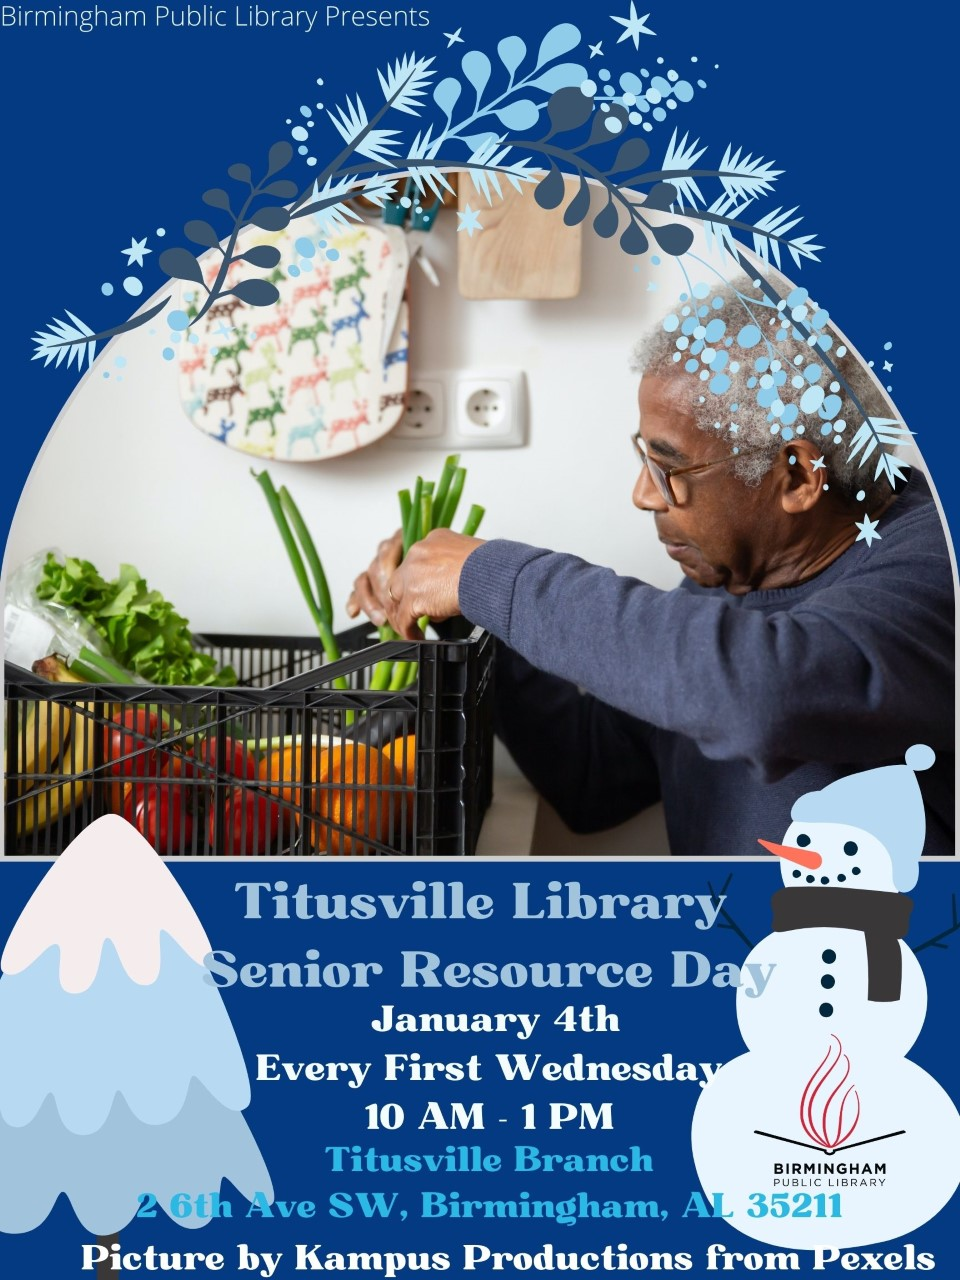 Titusville Library Senior Resource Day